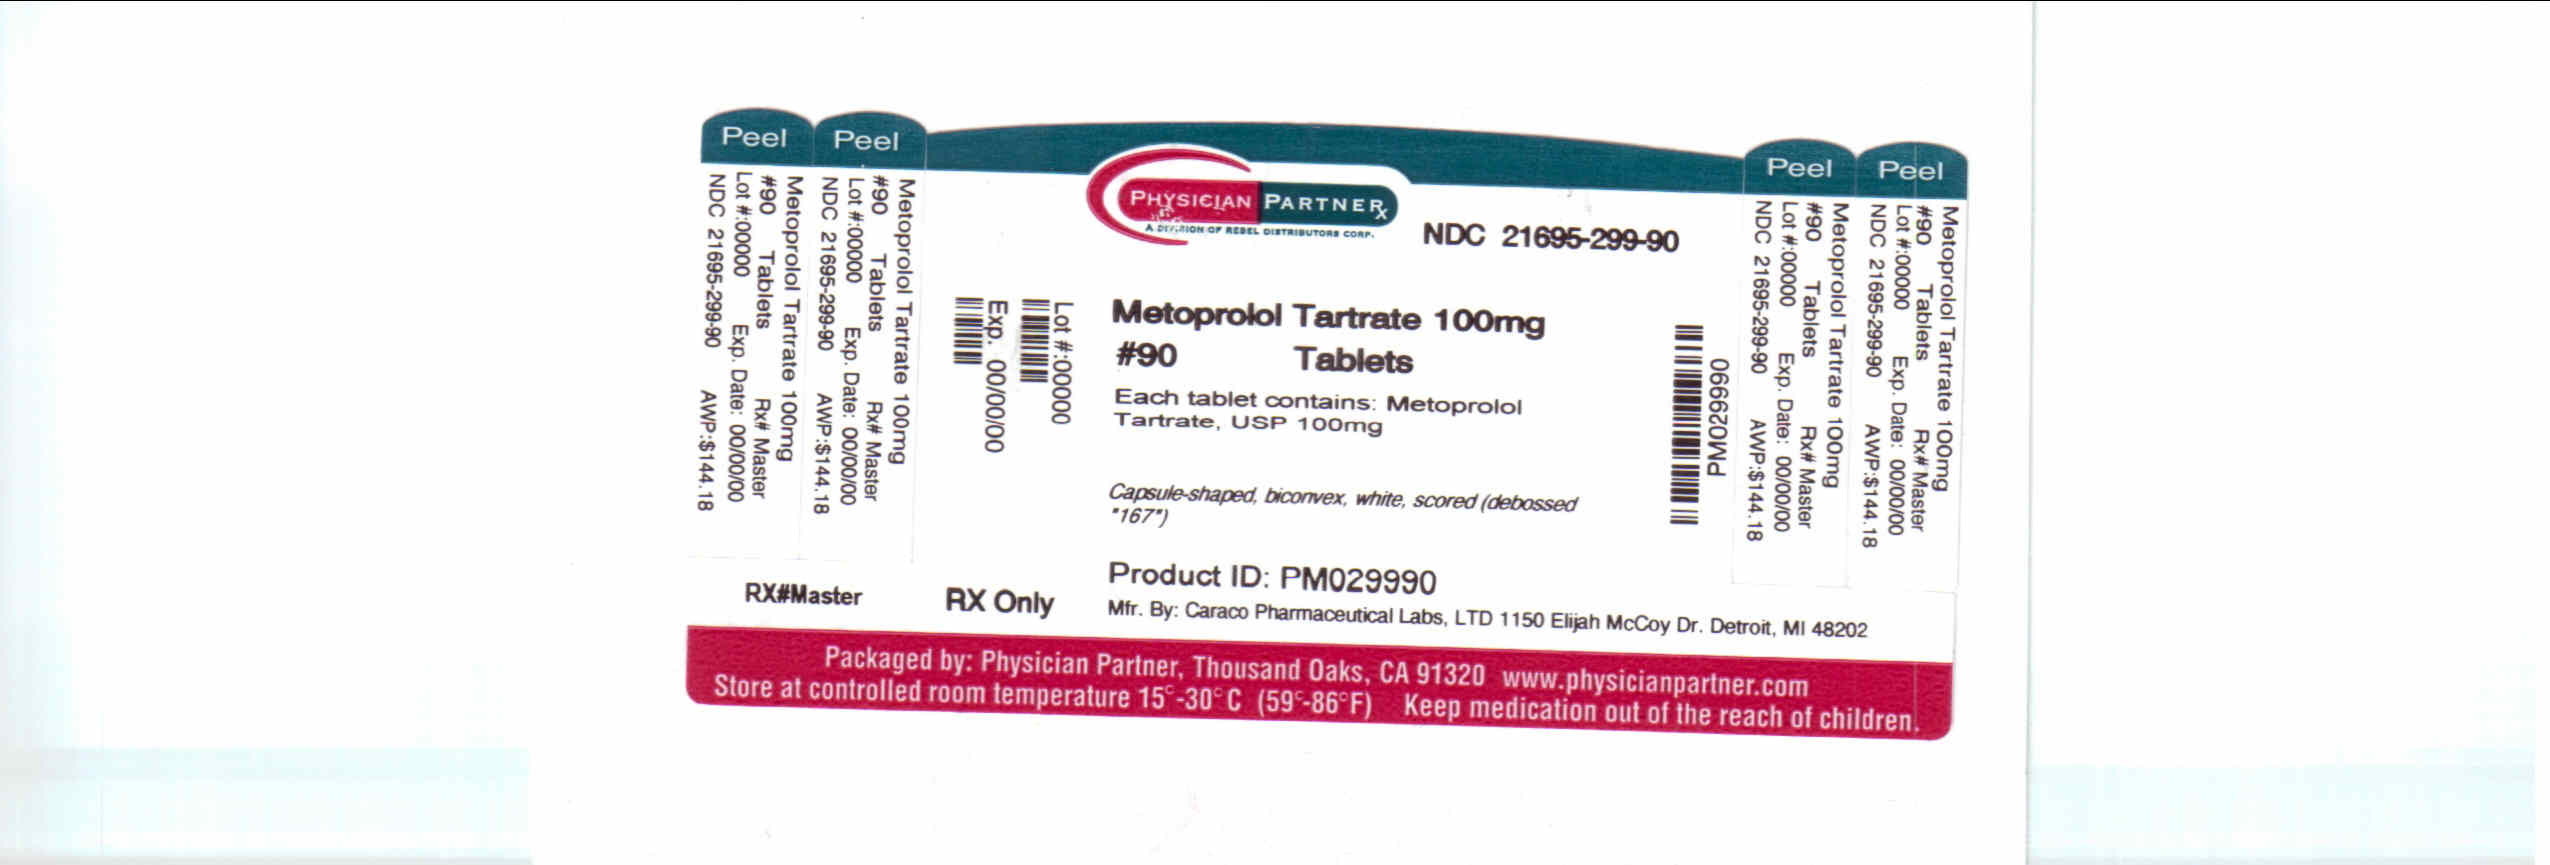 Metoprolol Tartrate 100mg